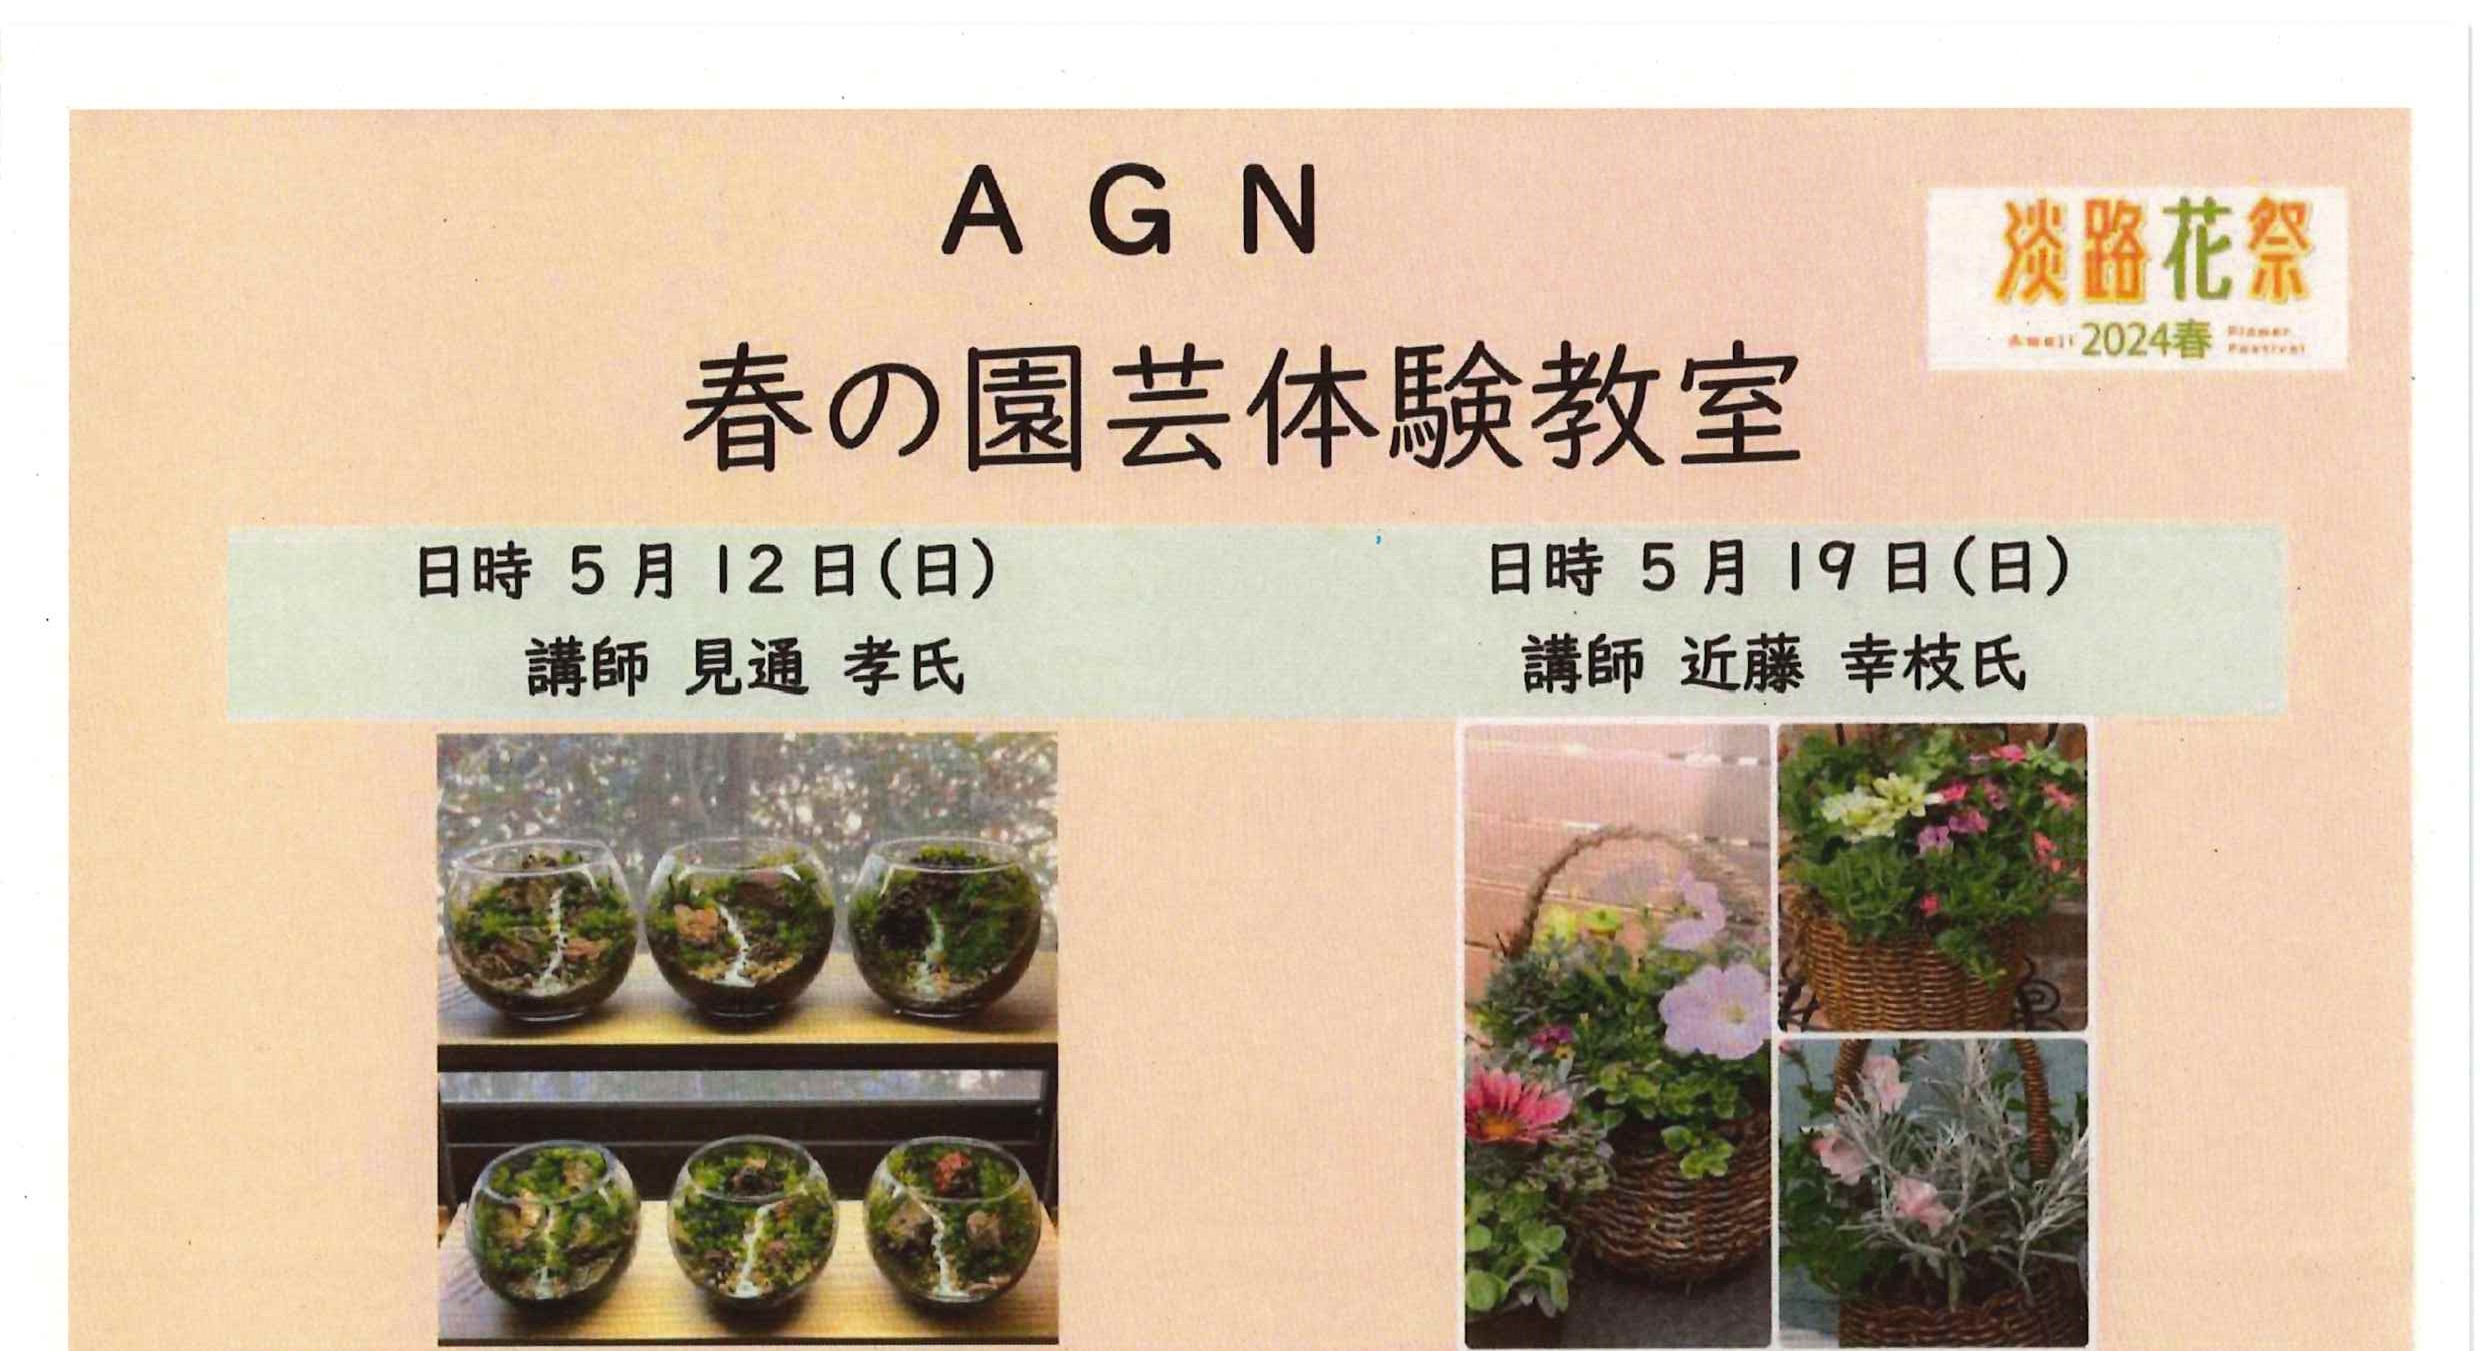 AGN春の園芸体験教室